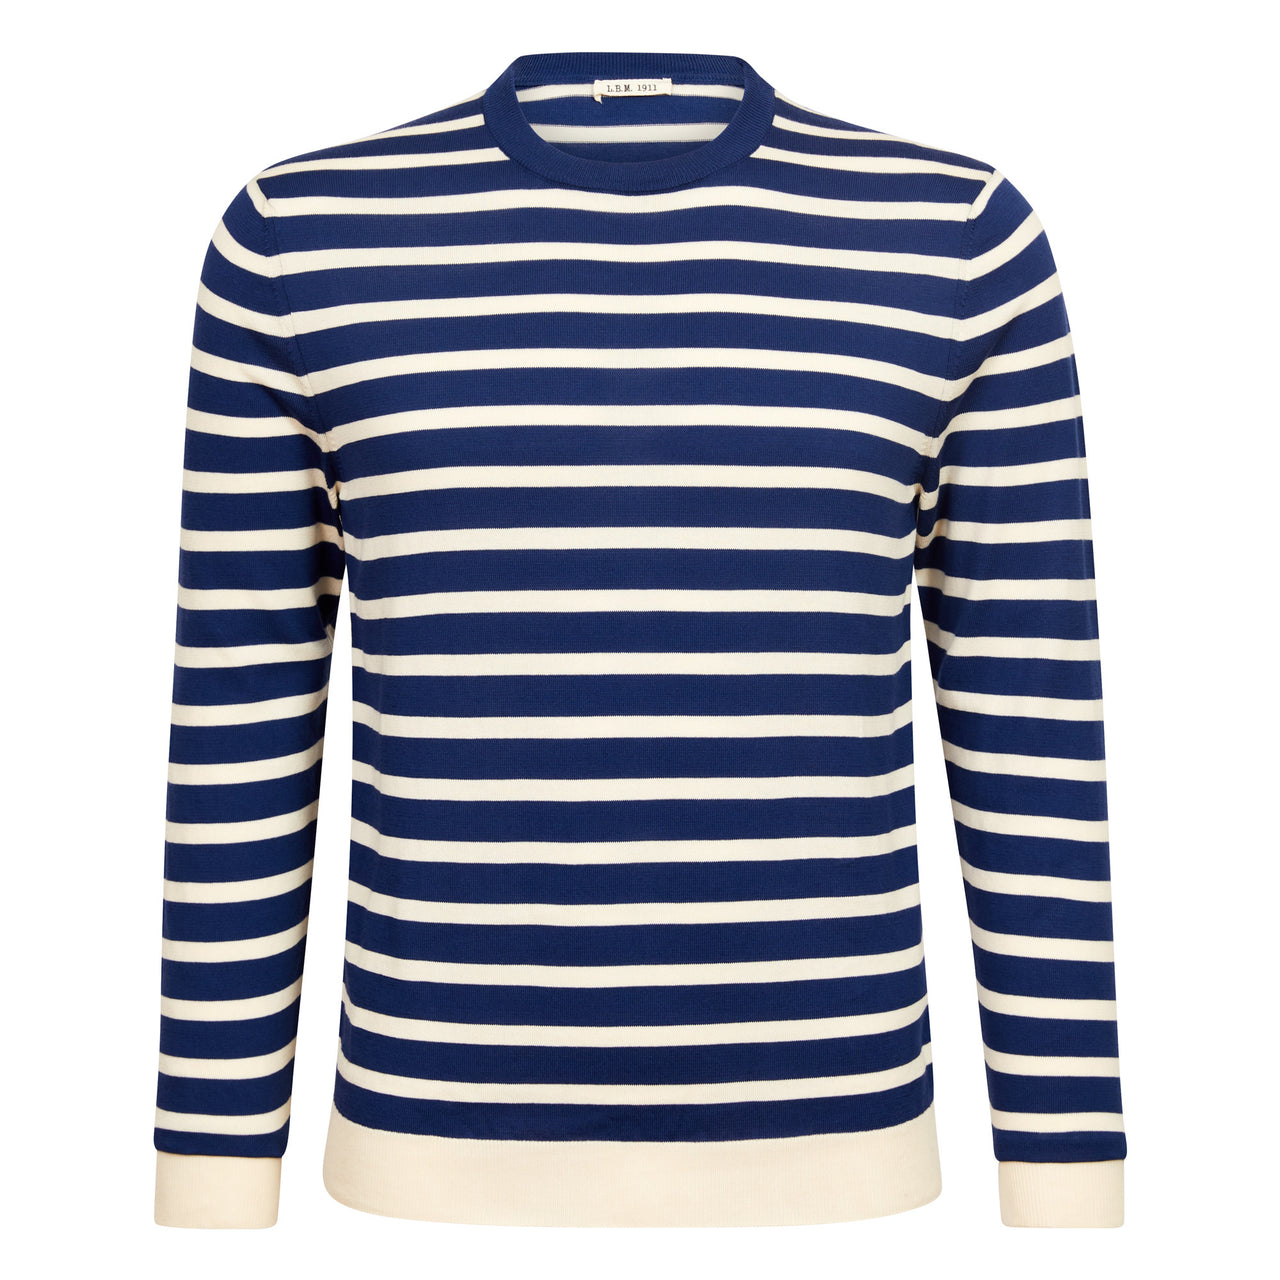 LBM 1911 Cotton Stripe Knitted Sweatshirt NAVY